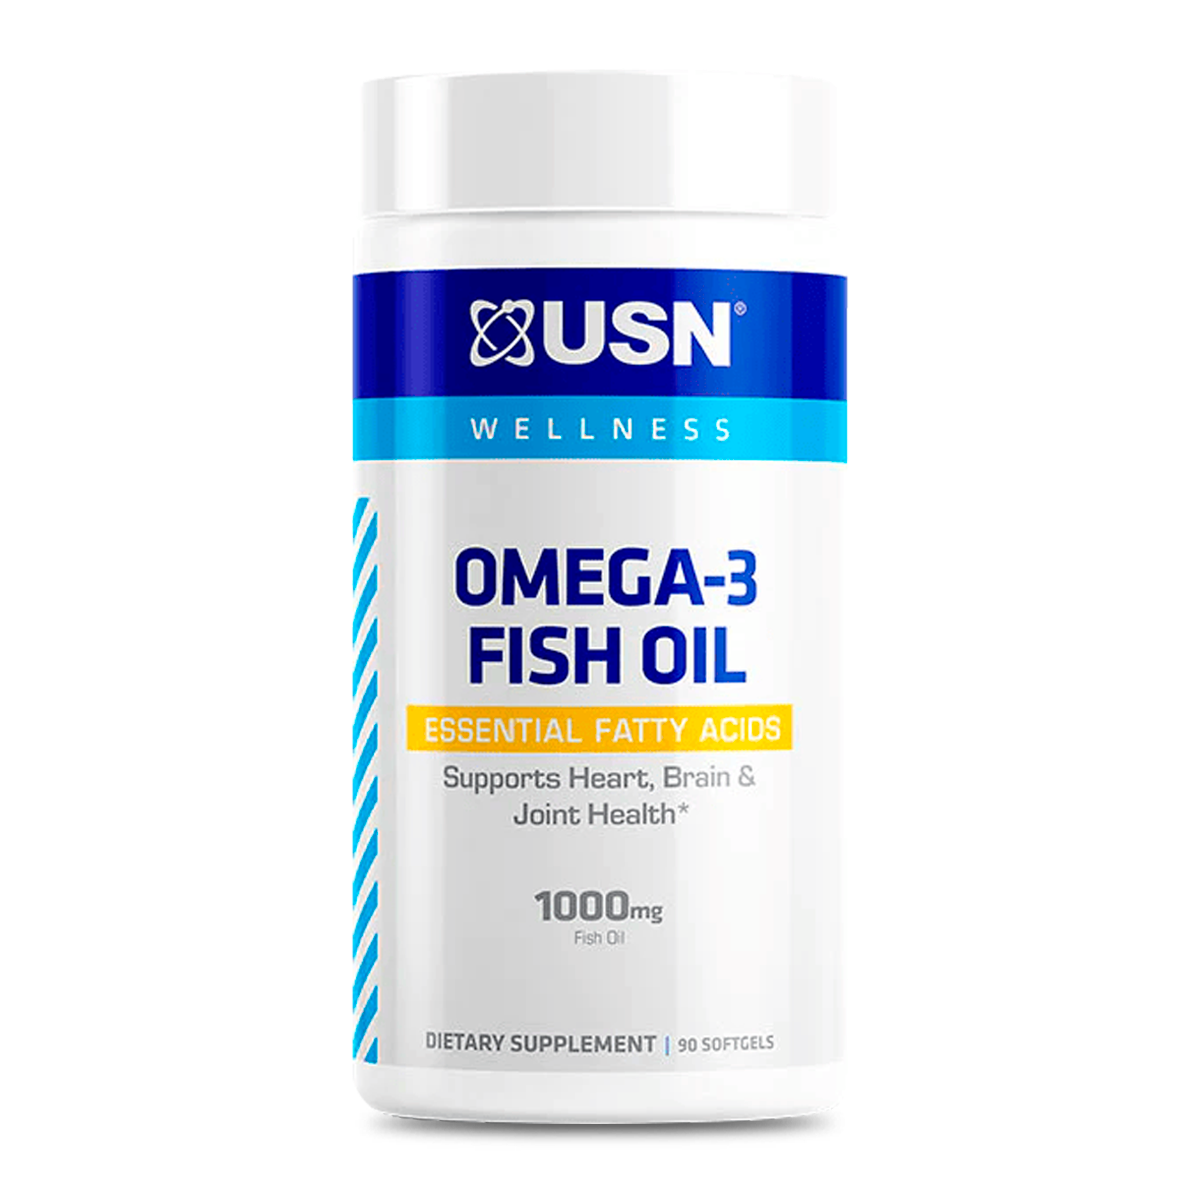 Omega 3 Fish Oil usn